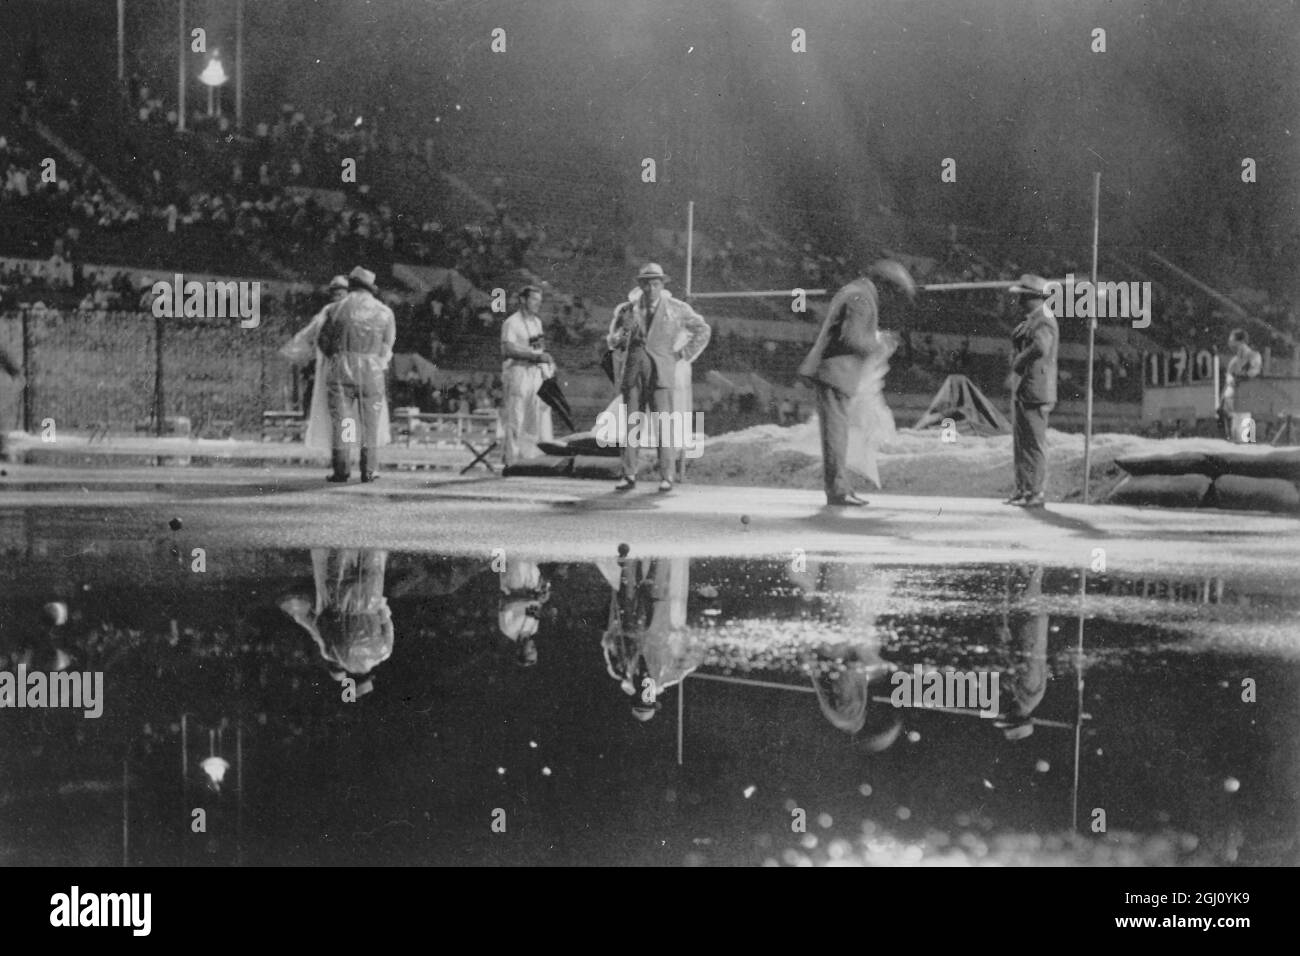 OLYMPIC GAME DECATHLON HIGHJUMP AFTER HEAVY RAIN 5 SEPTEMBER 1960 Stock Photo